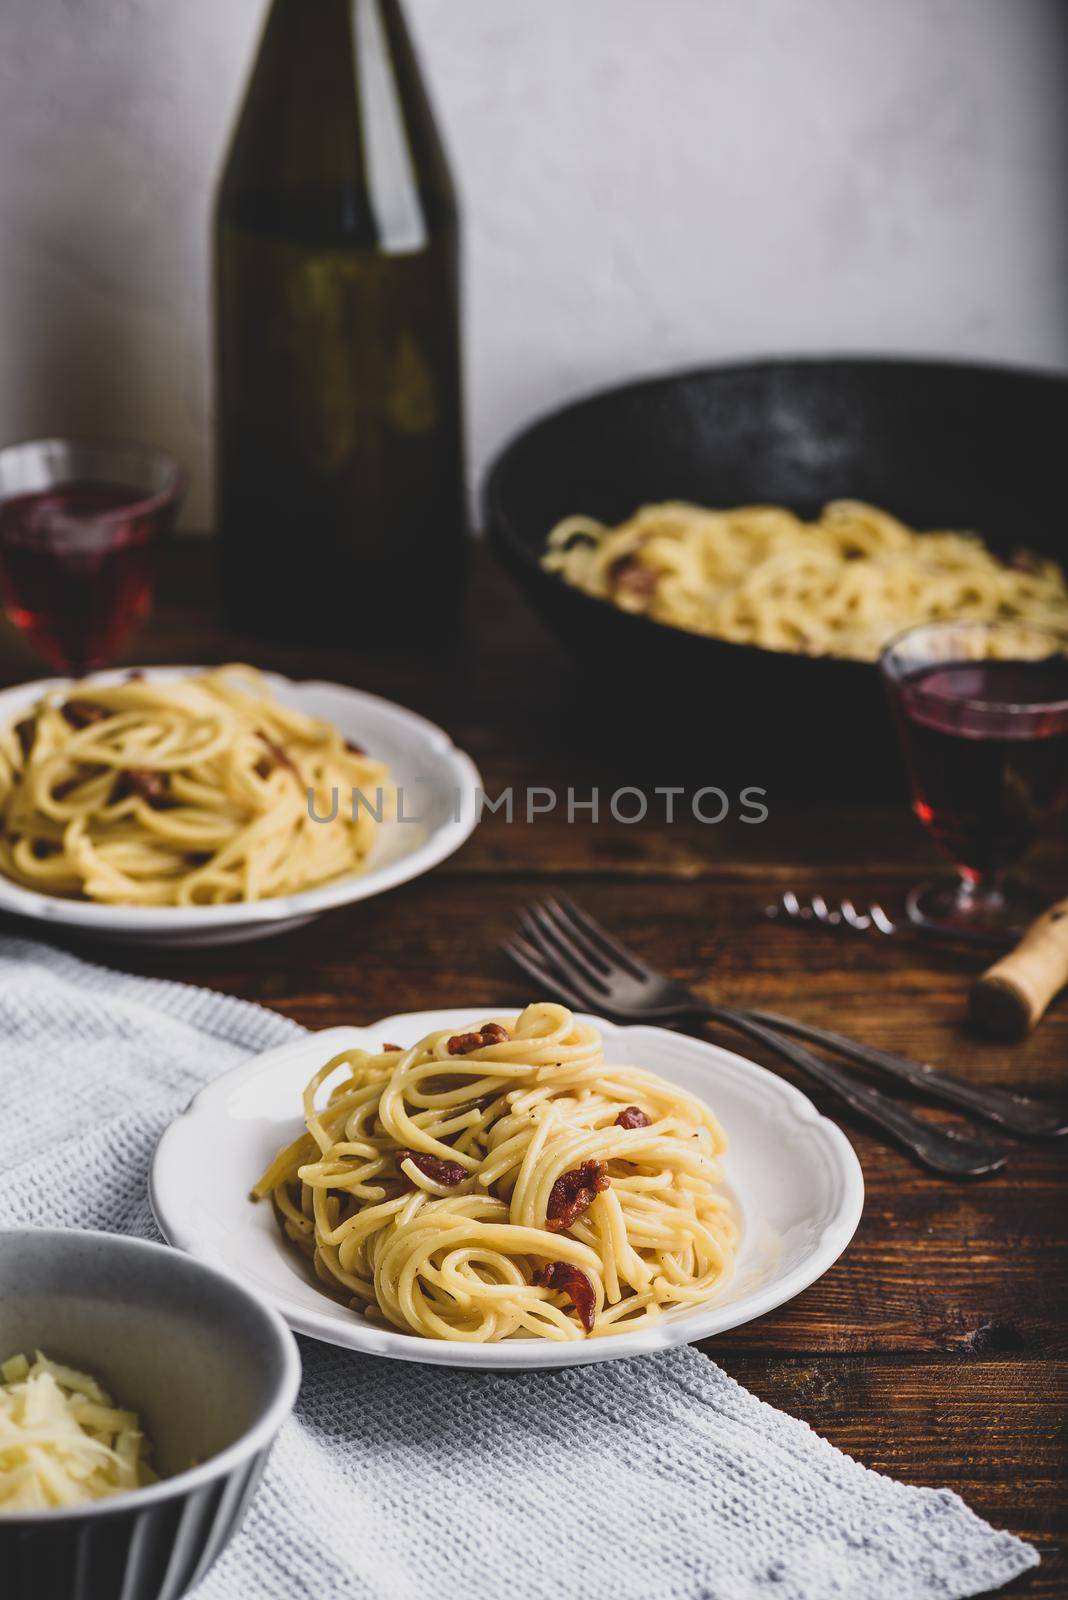 Classic carbonara pasta by Seva_blsv